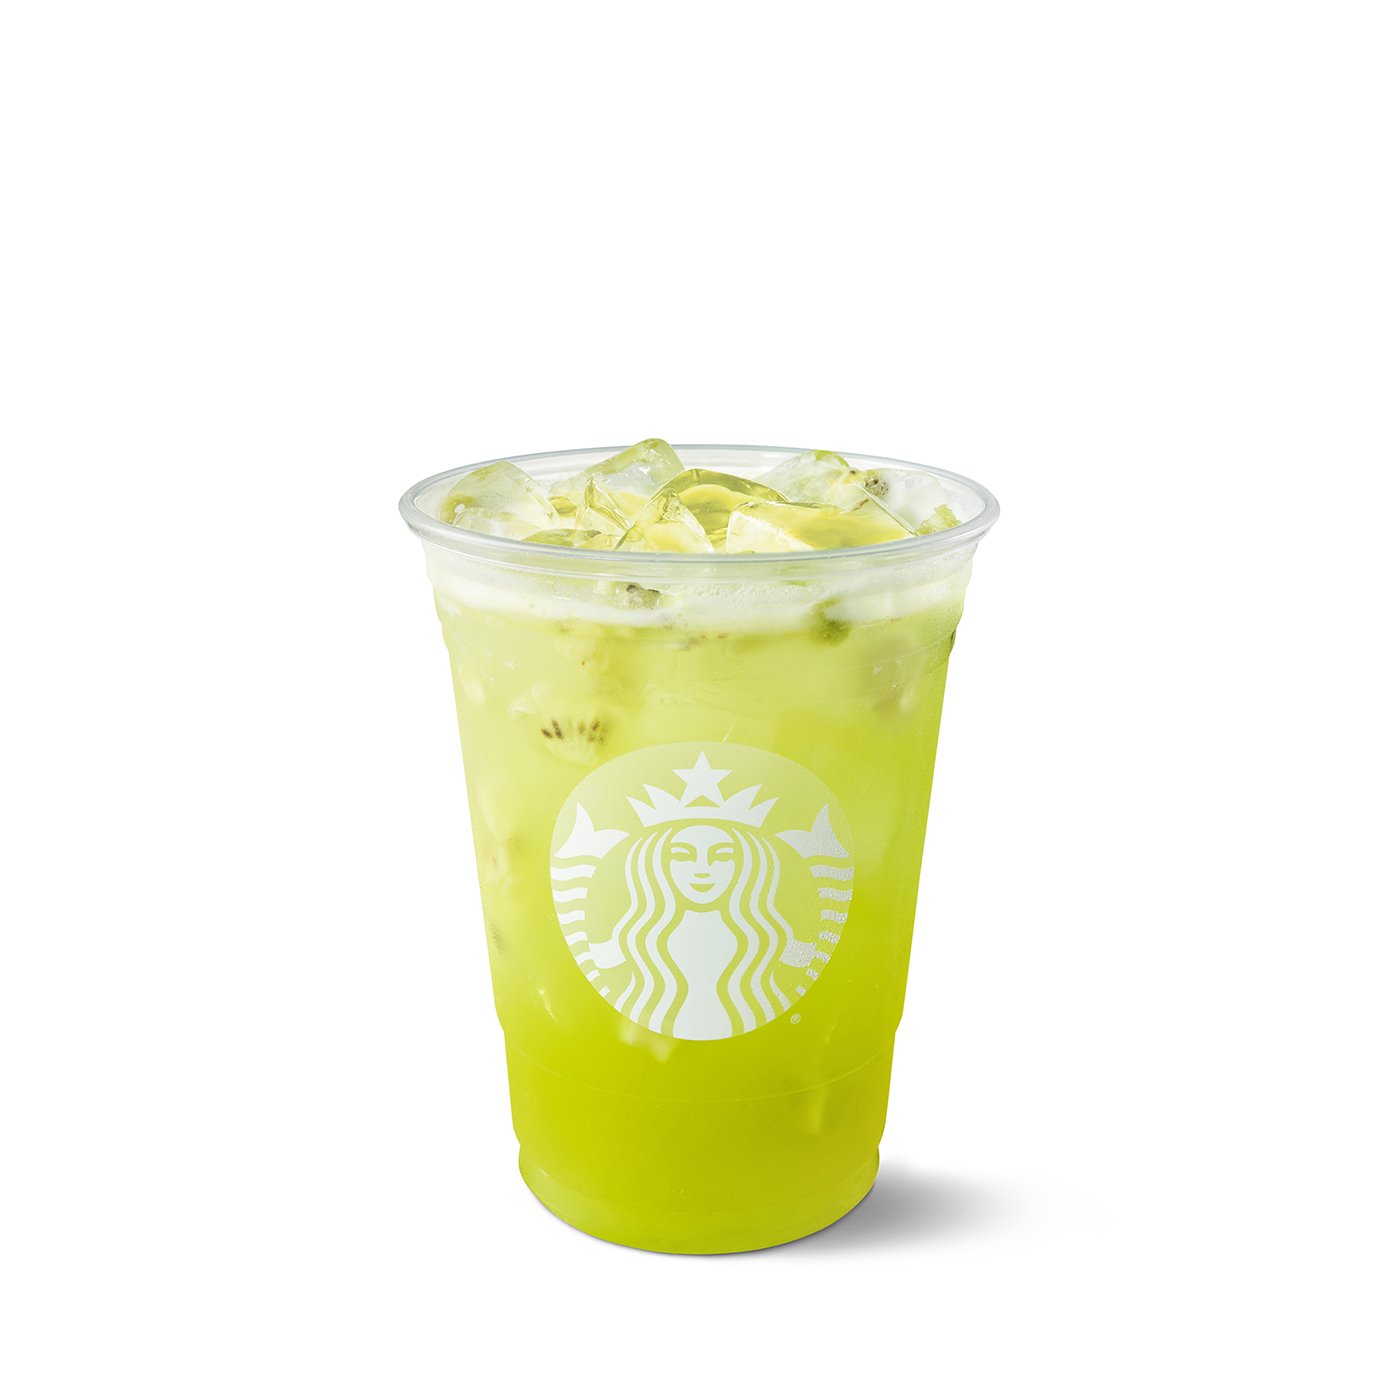 Starbucks’ New Kiwi Starfruit Refresher Gets Mixed Reviews at Best